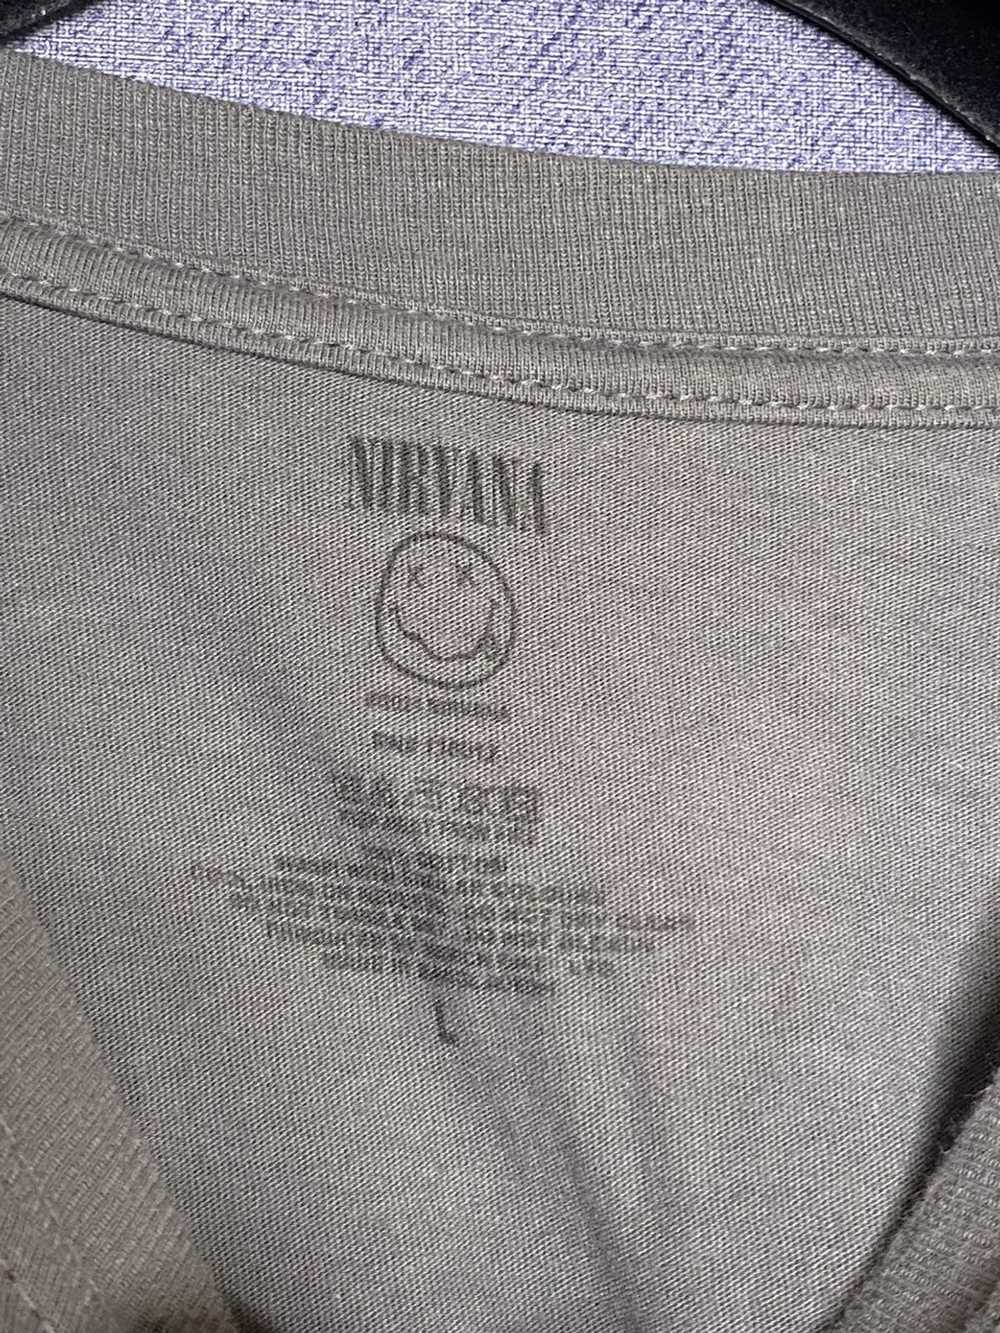 Nirvana Nirvana smile t shirt L - image 2